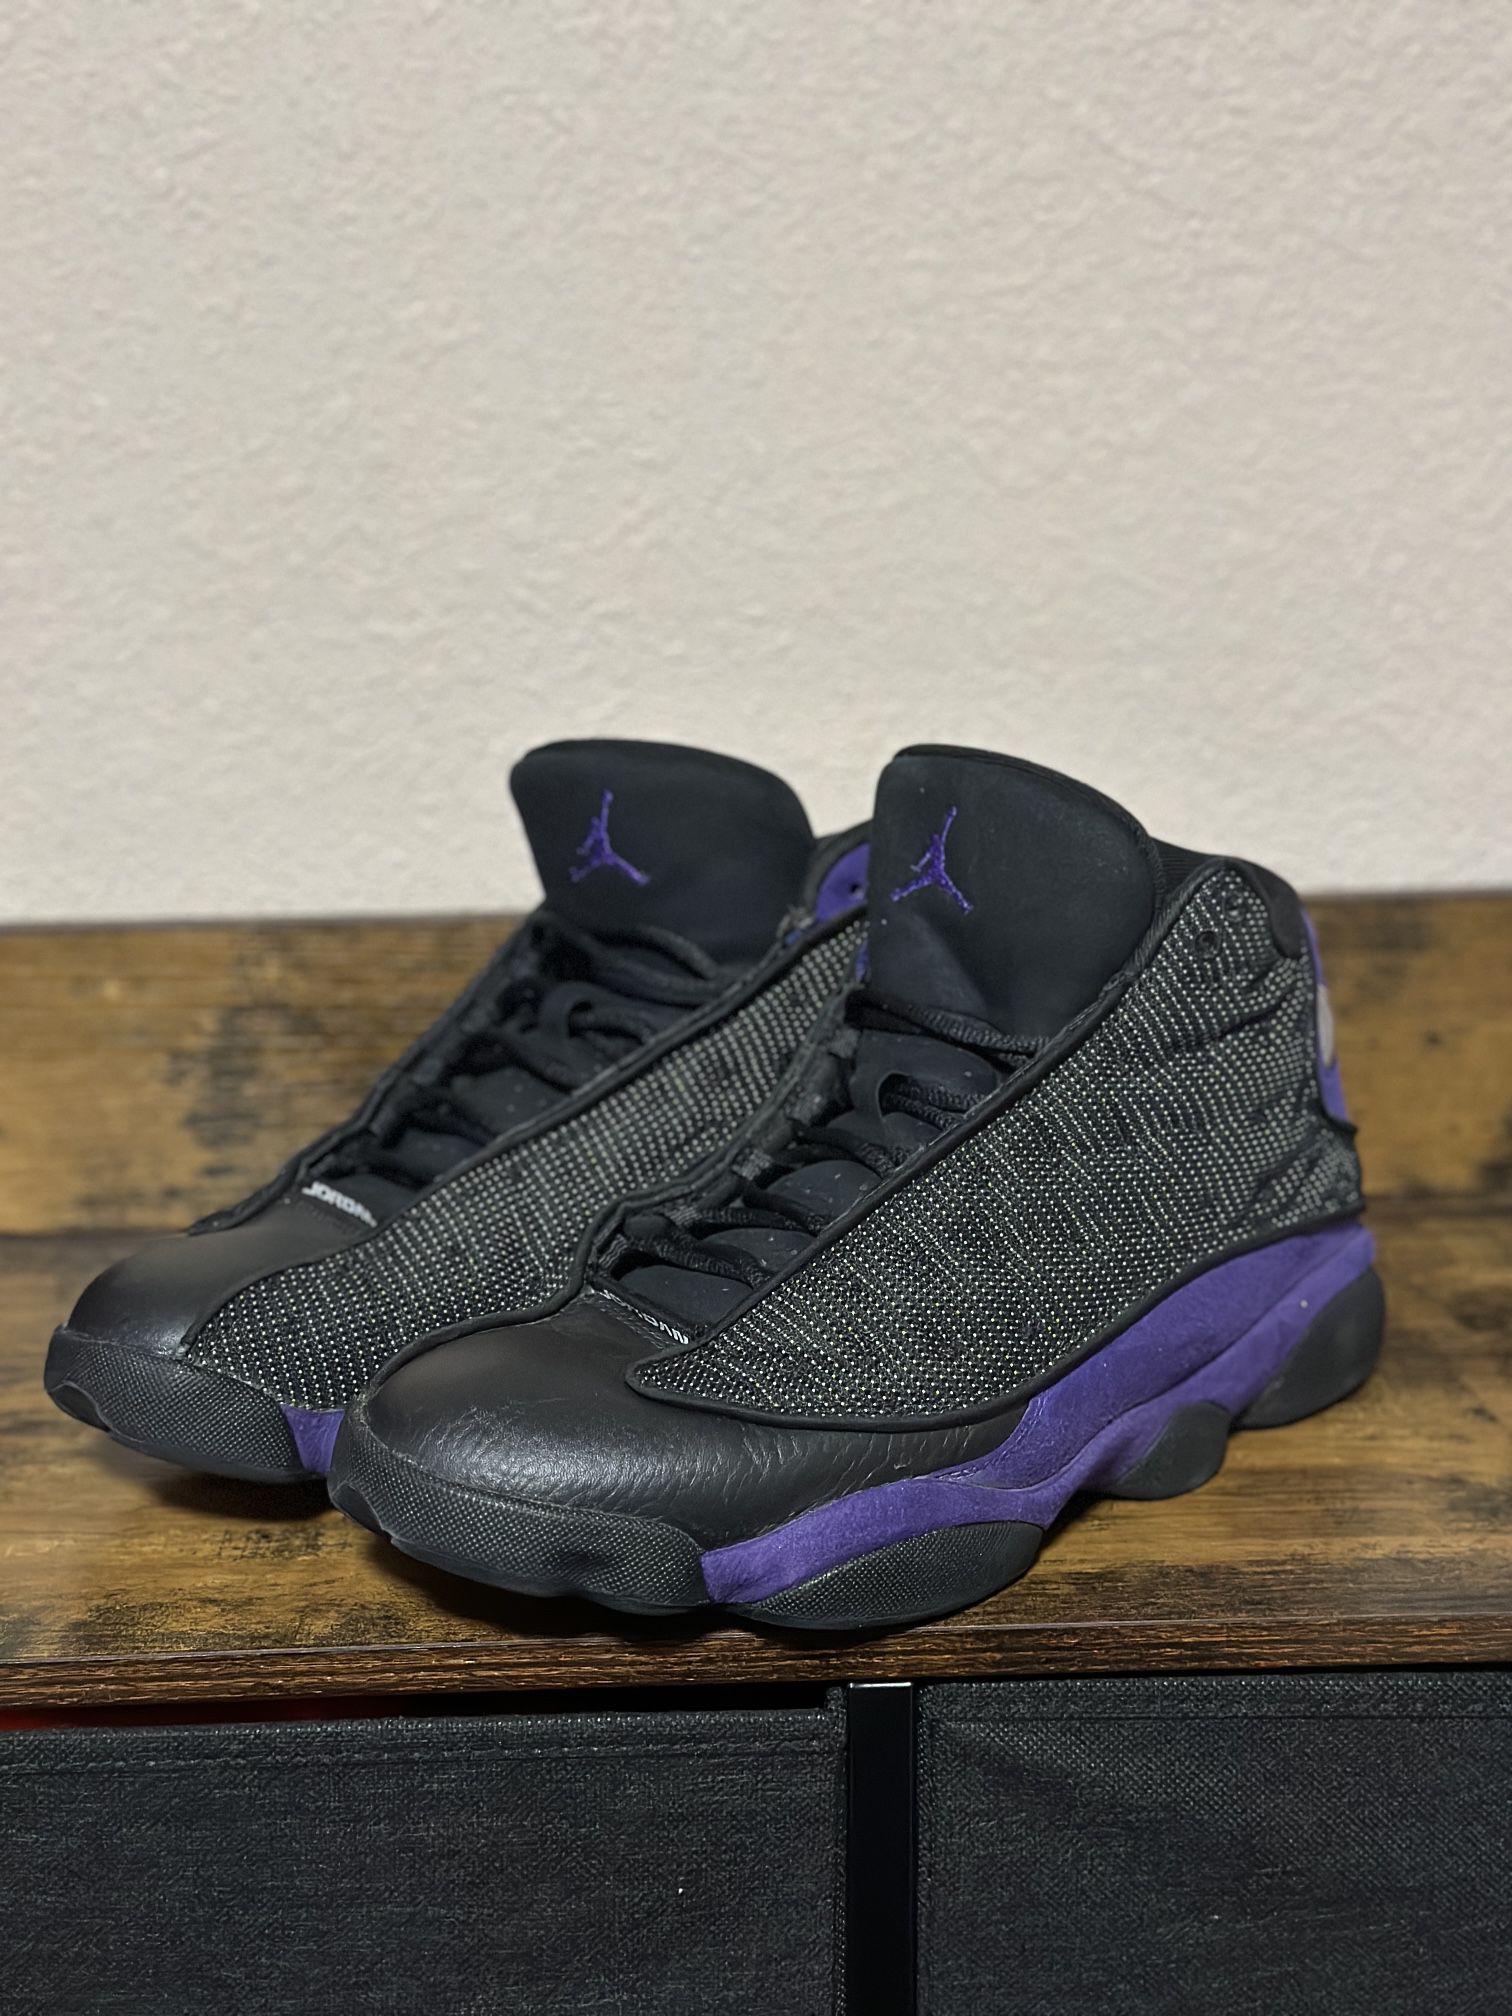 Jordan 13 Court Purple Sz 11.5